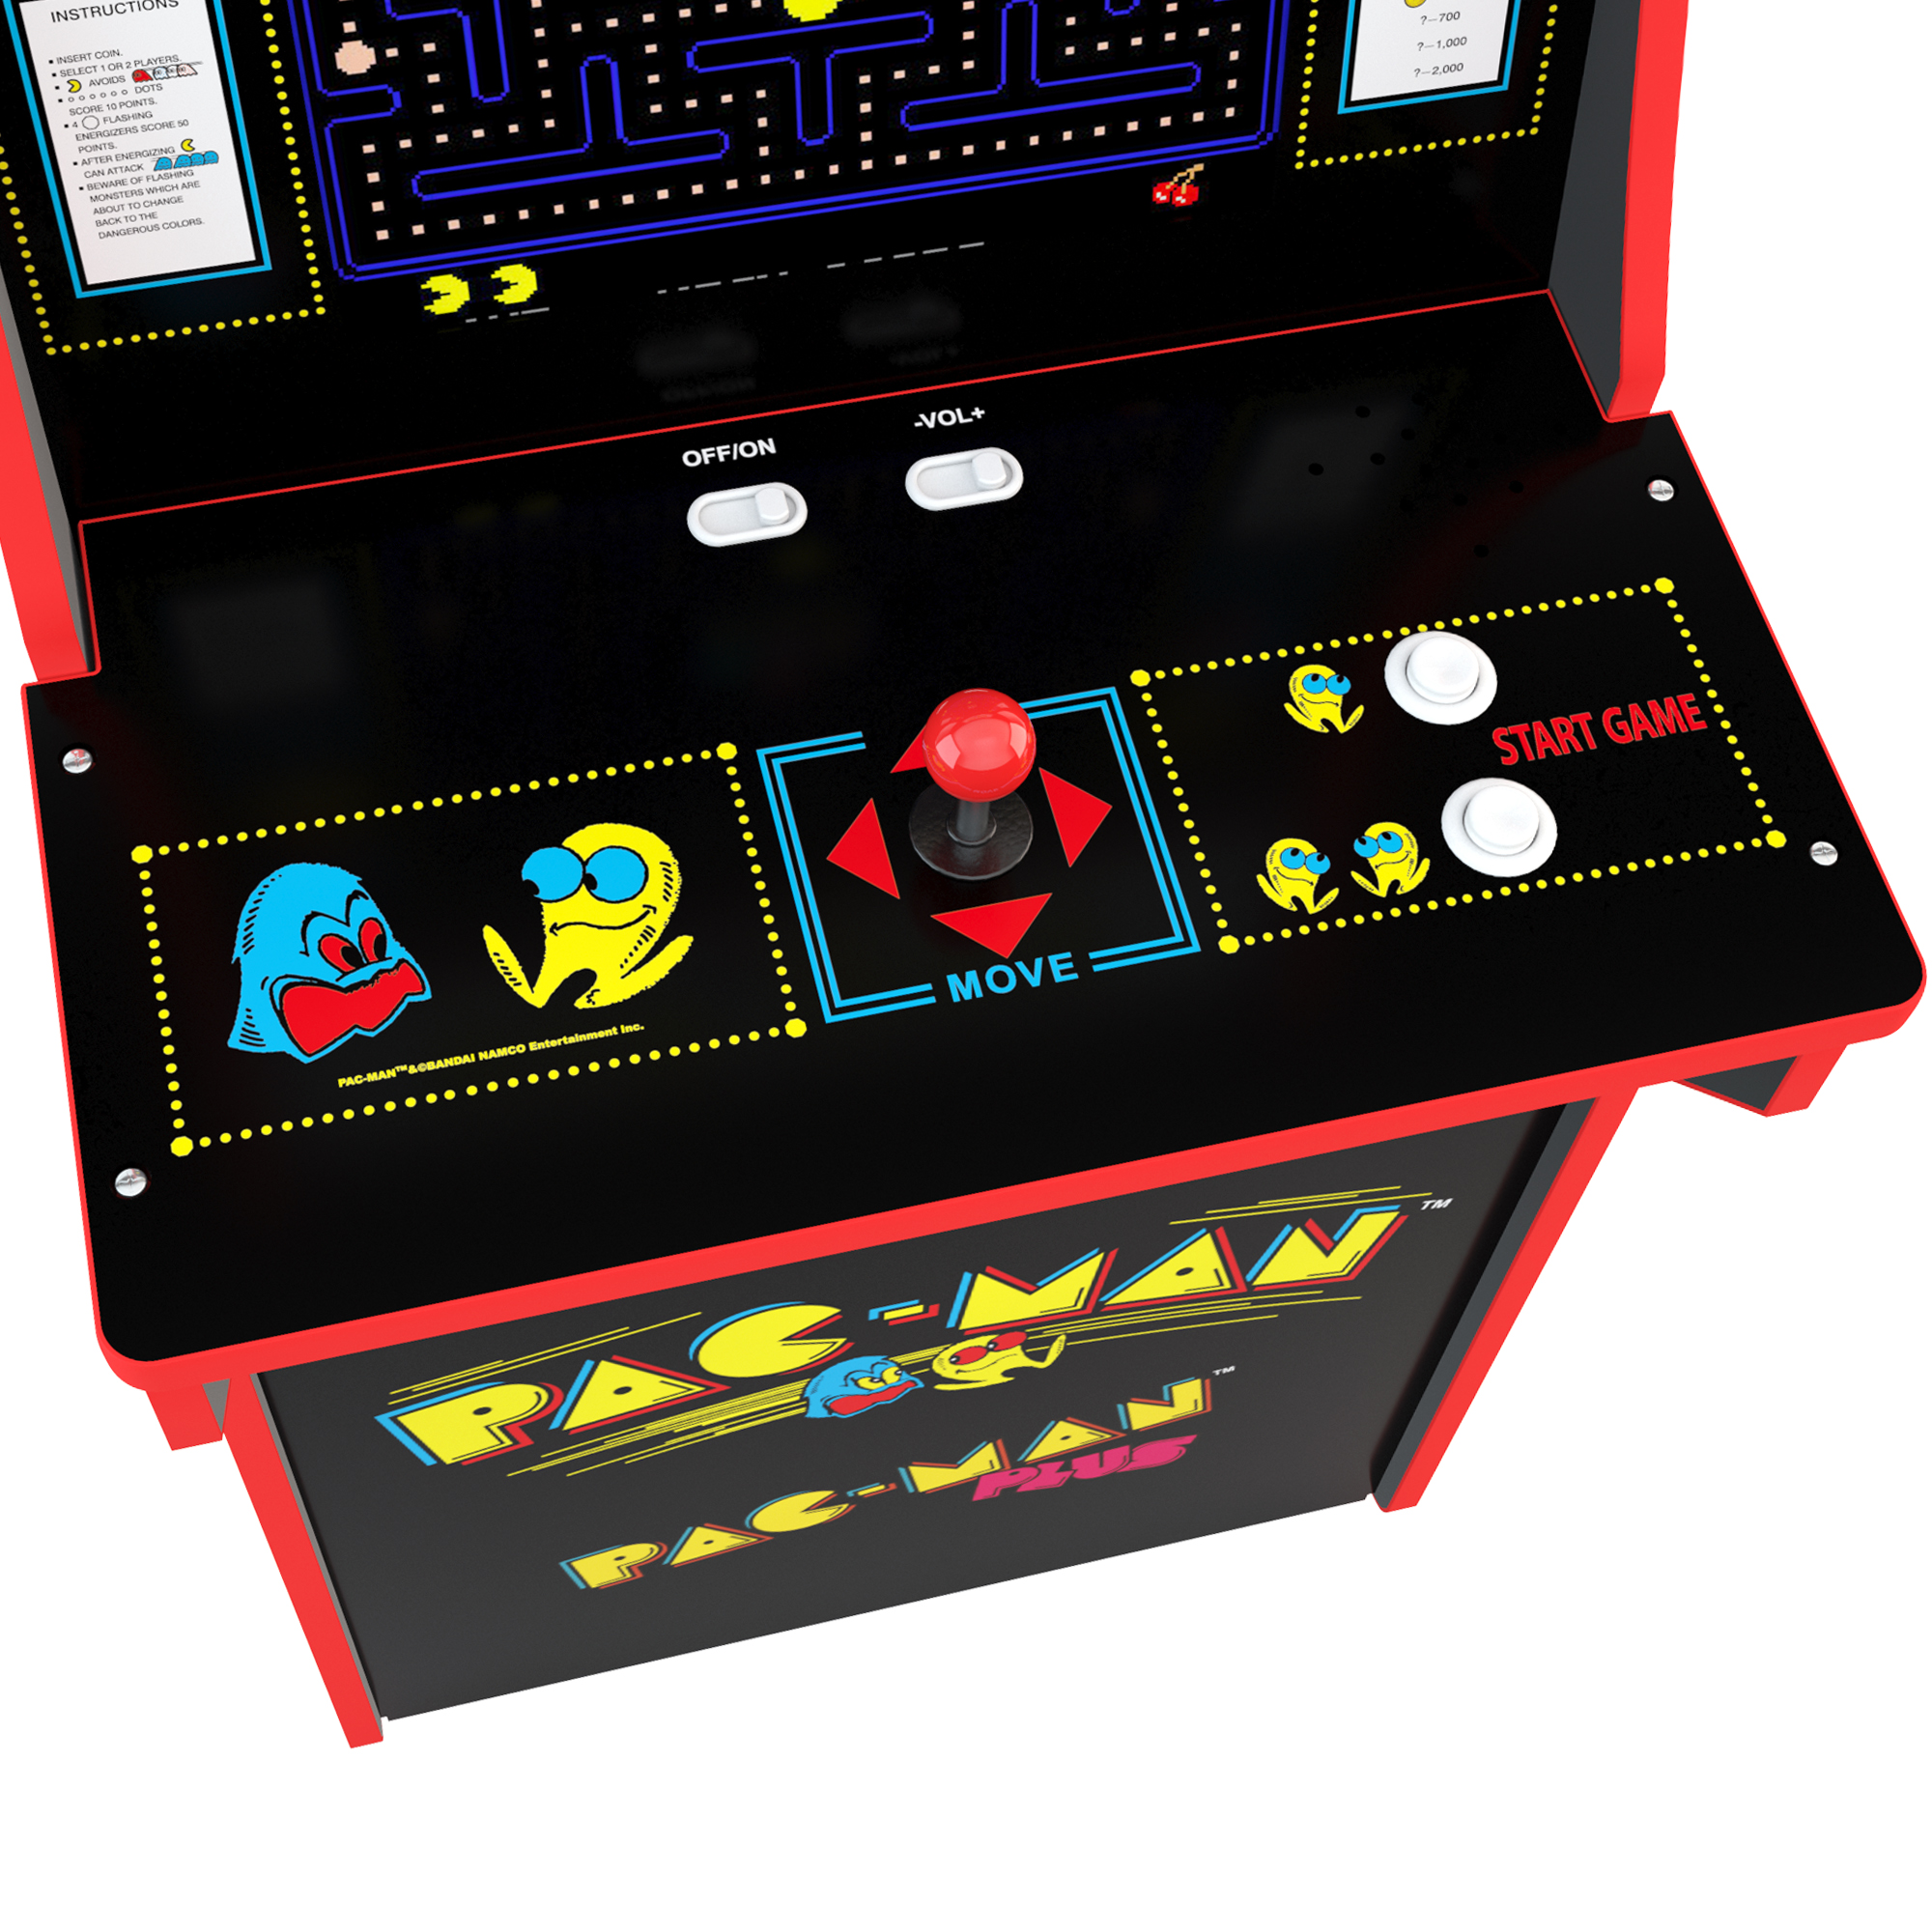 Pac-Man Arcade Machine with Riser, Arcade1UP - image 3 of 8